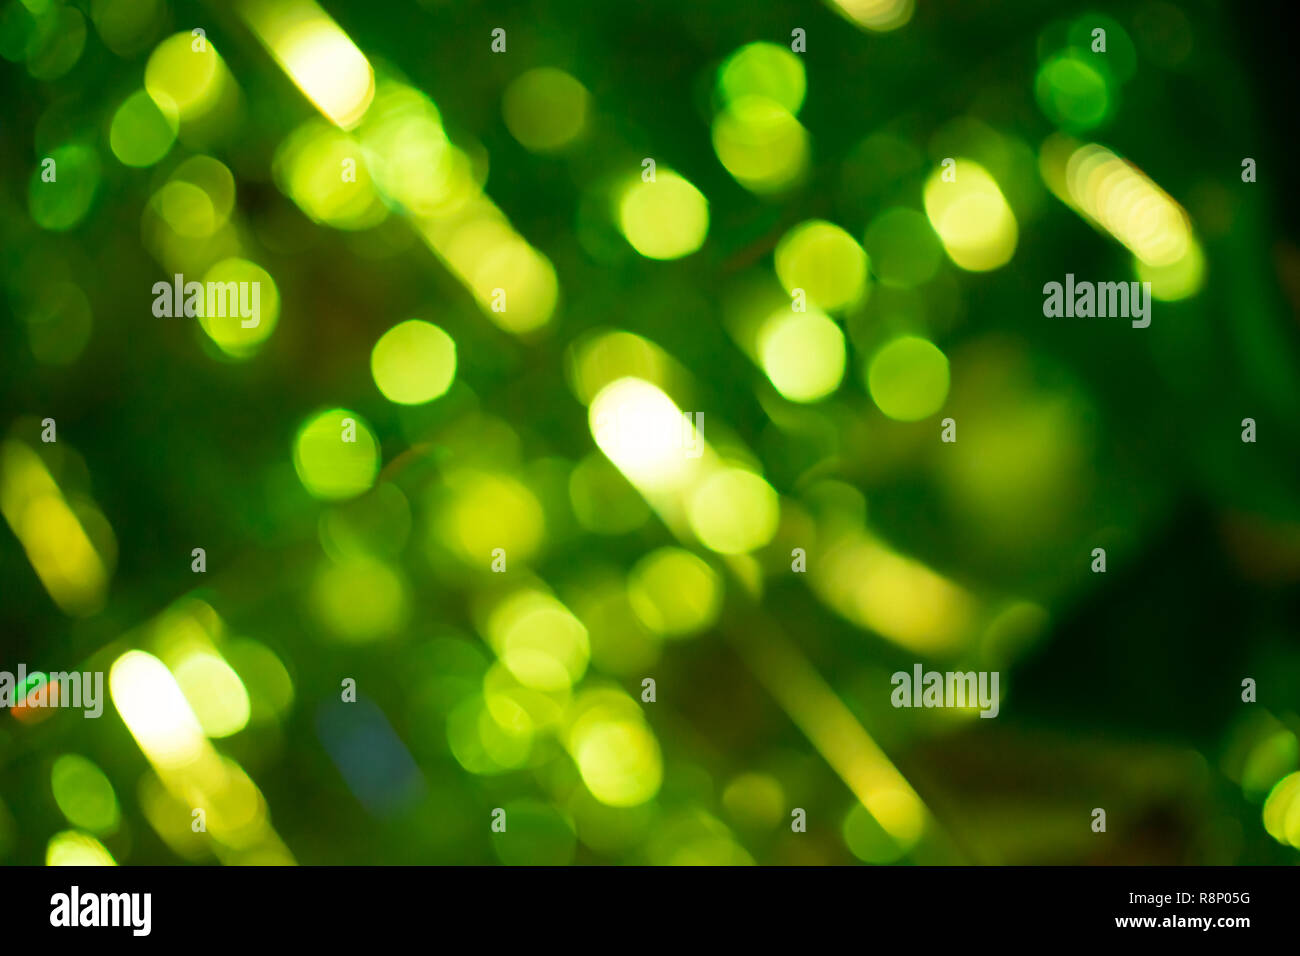 Random Grun Bokeh Licht Hintergrundbild Farbe Texturen Festival Und Nacht Stockfotografie Alamy